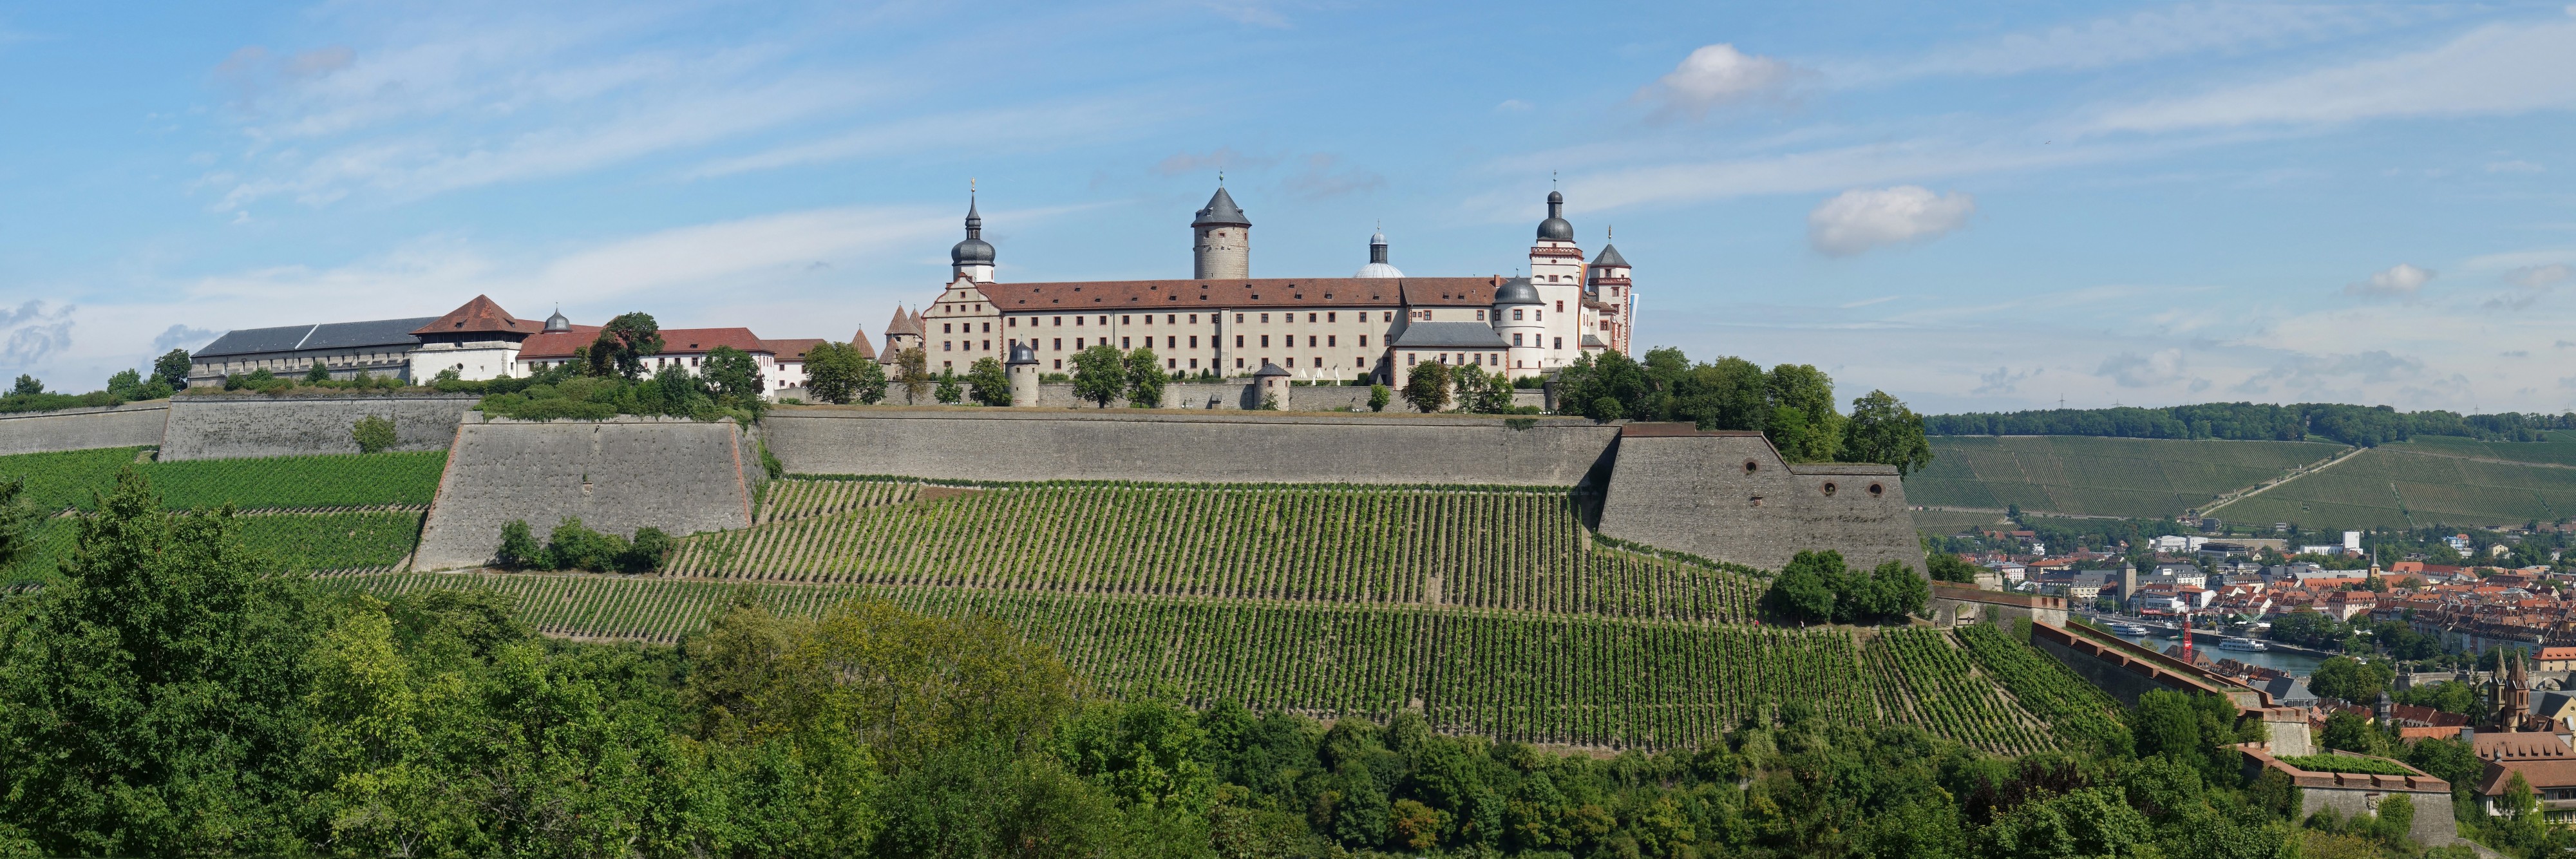 Festung Marienberg, 7